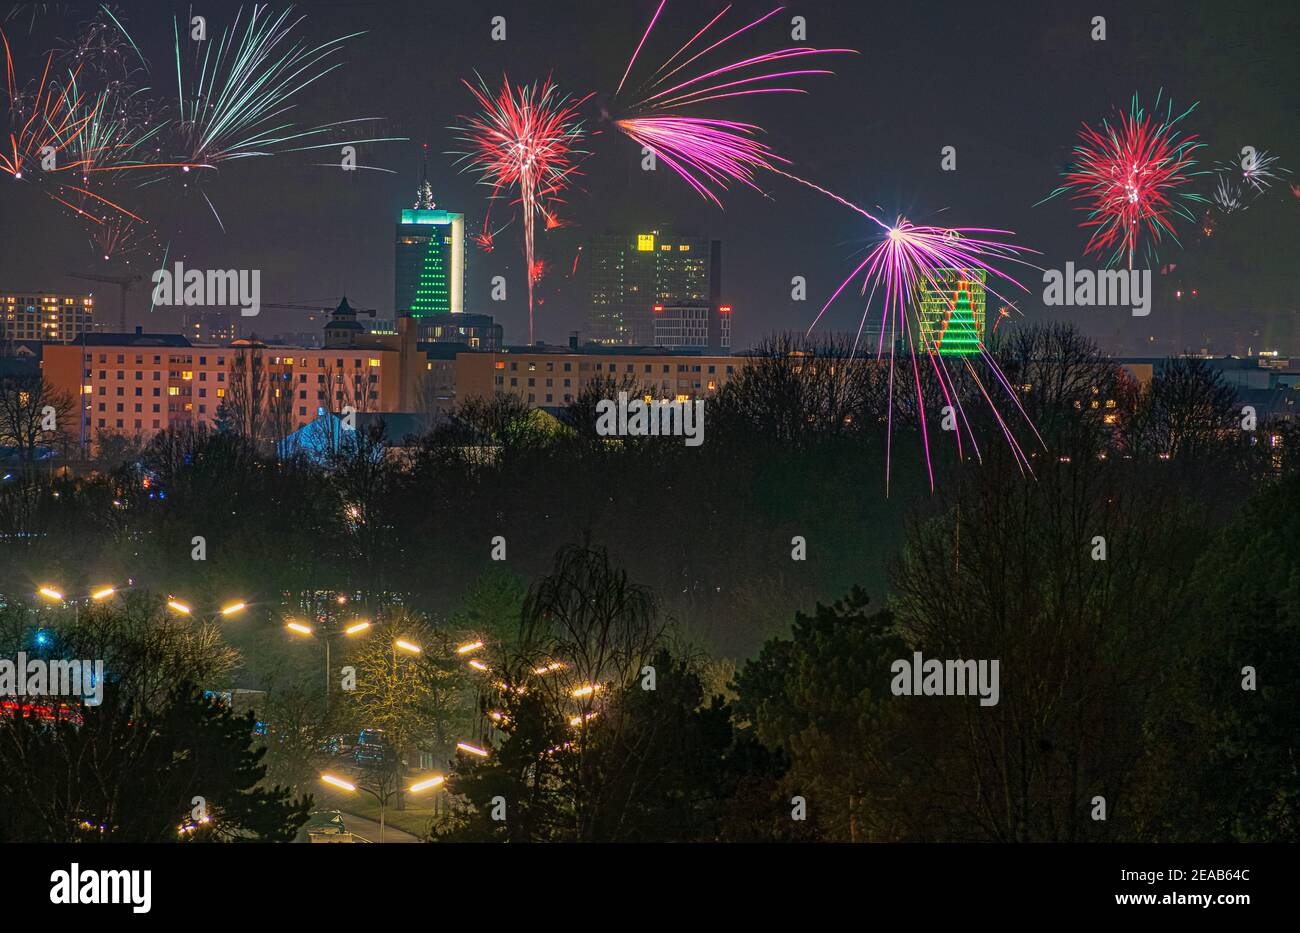 Fireworks at the illuminated city of Munich at night. Stock Photo